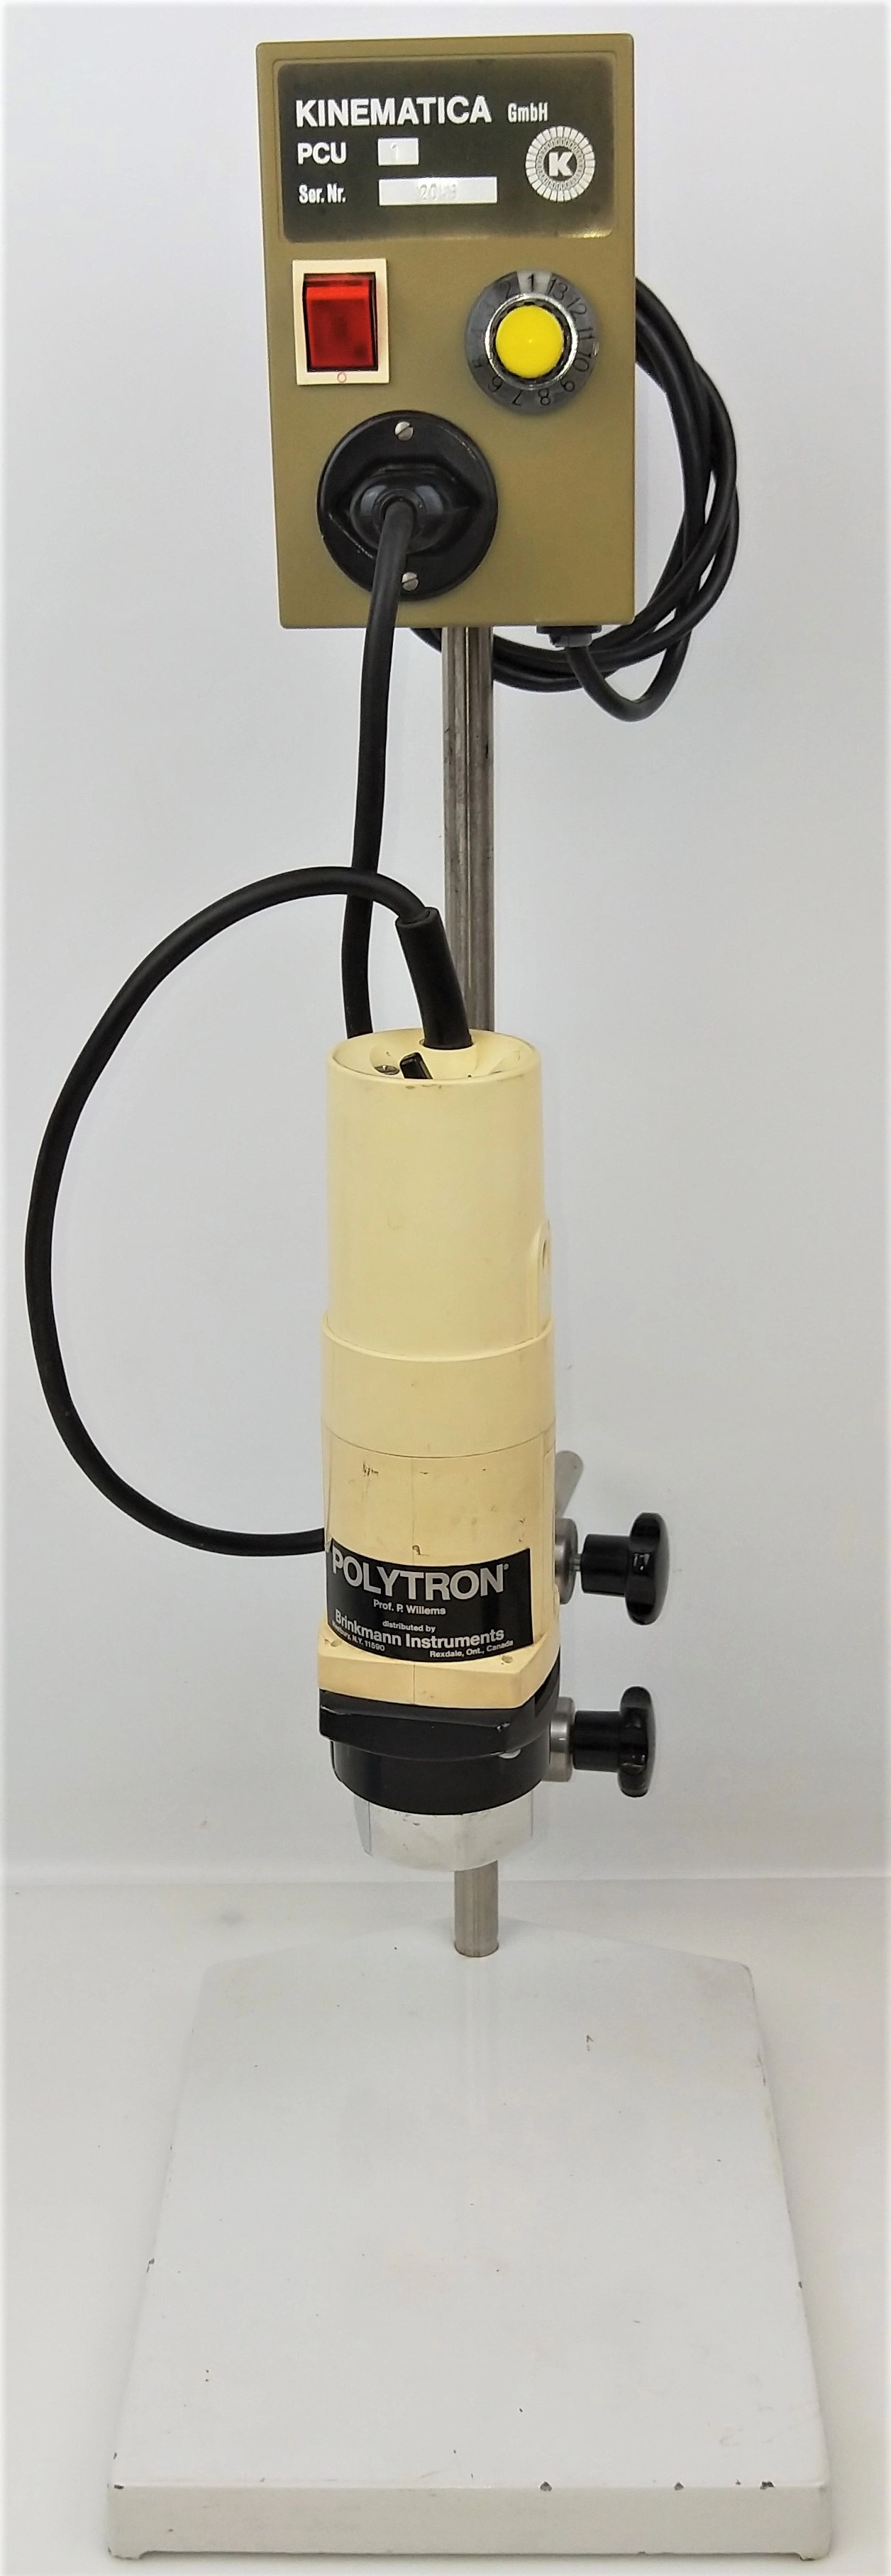 Kinematica Polytron PT 10/35 Blade-type Homogenizer with PCU-11 Controller